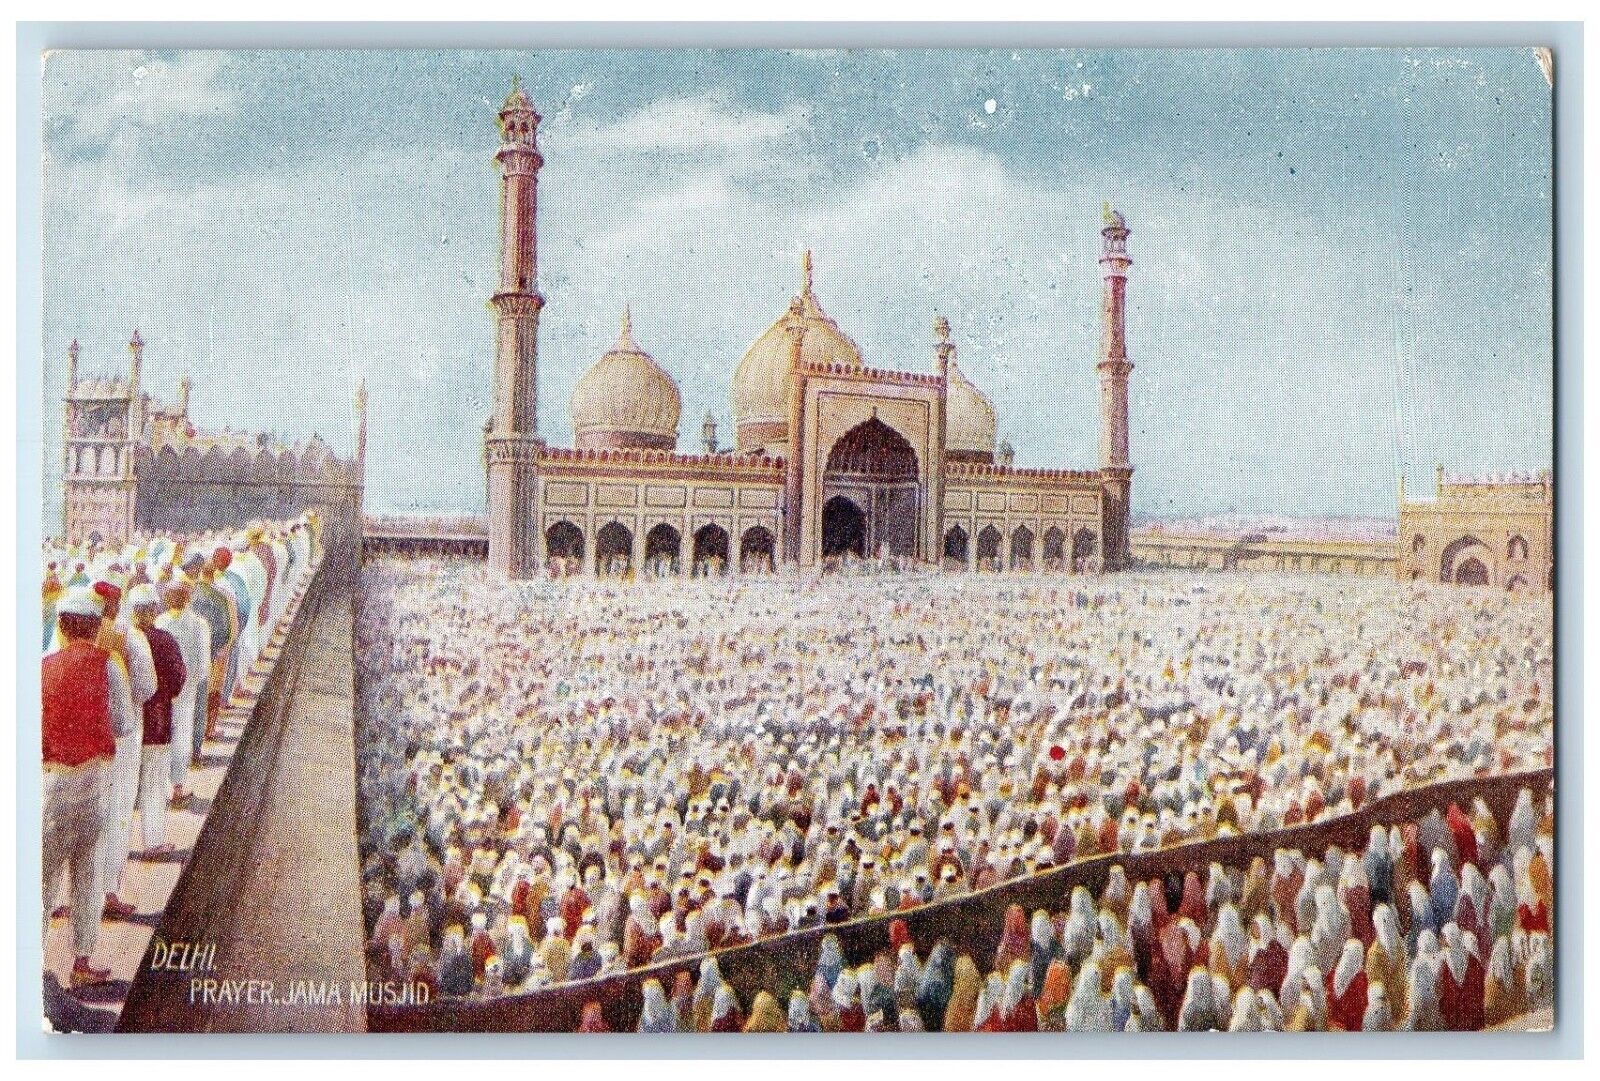 c1910's Prayer Jama Musjid Delhi India Oilette Tuck's, Largest Mosque Postcard